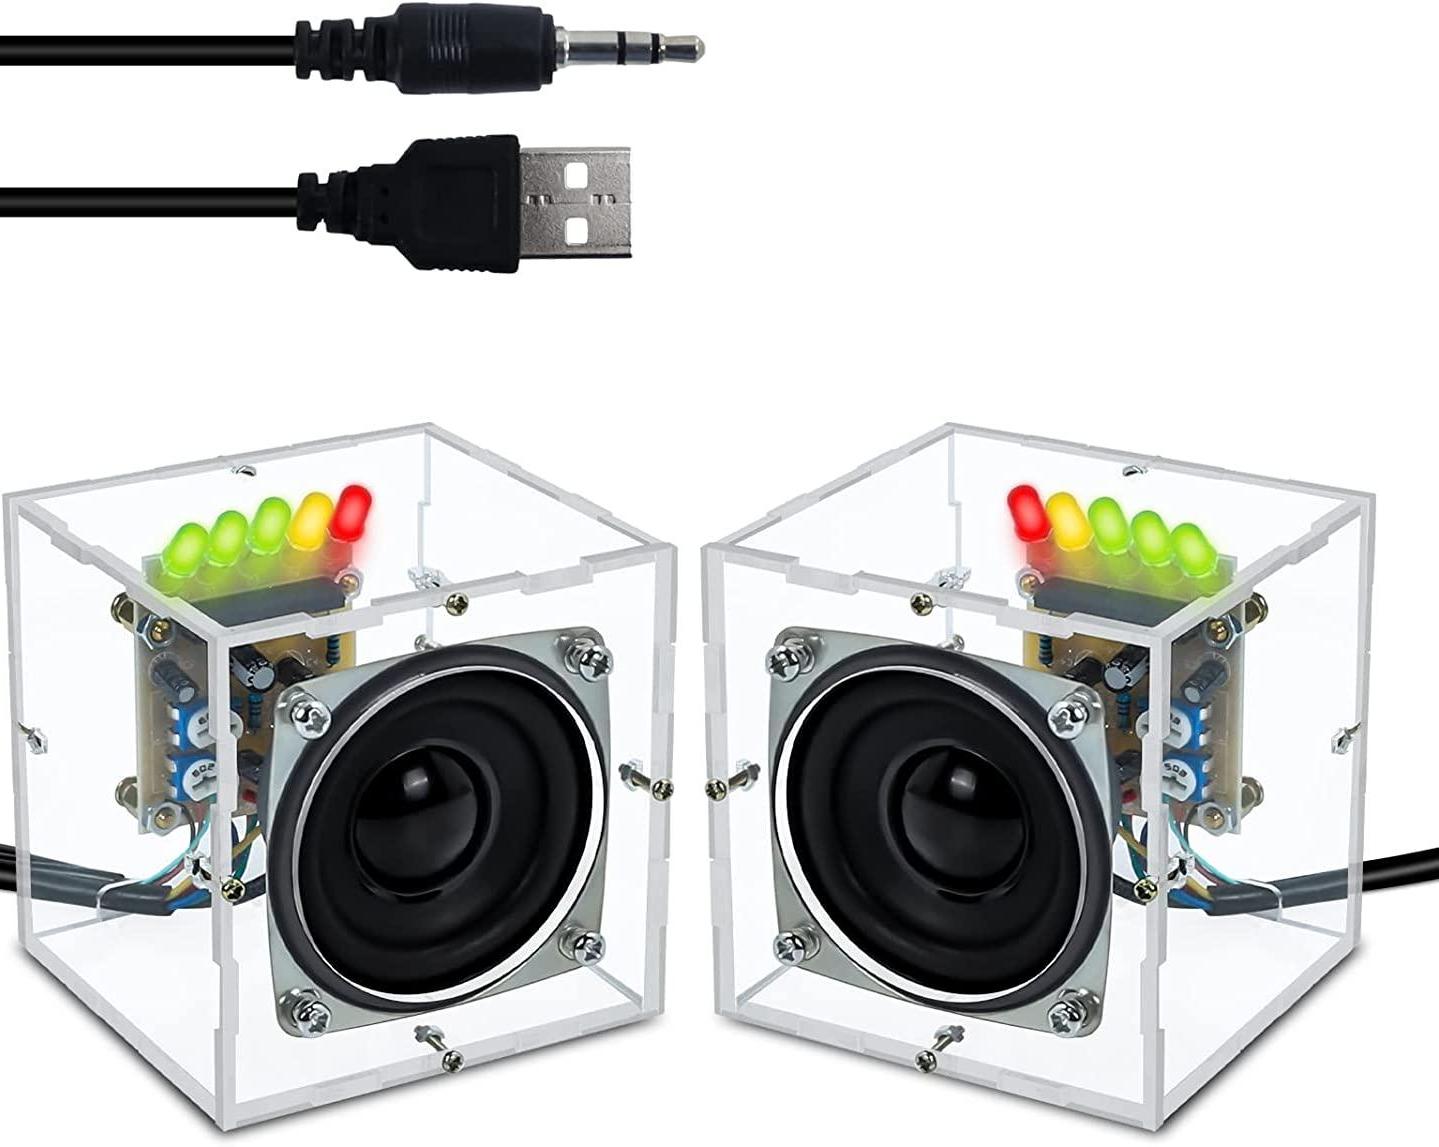 ICStation Amplified Dual Speaker Kit